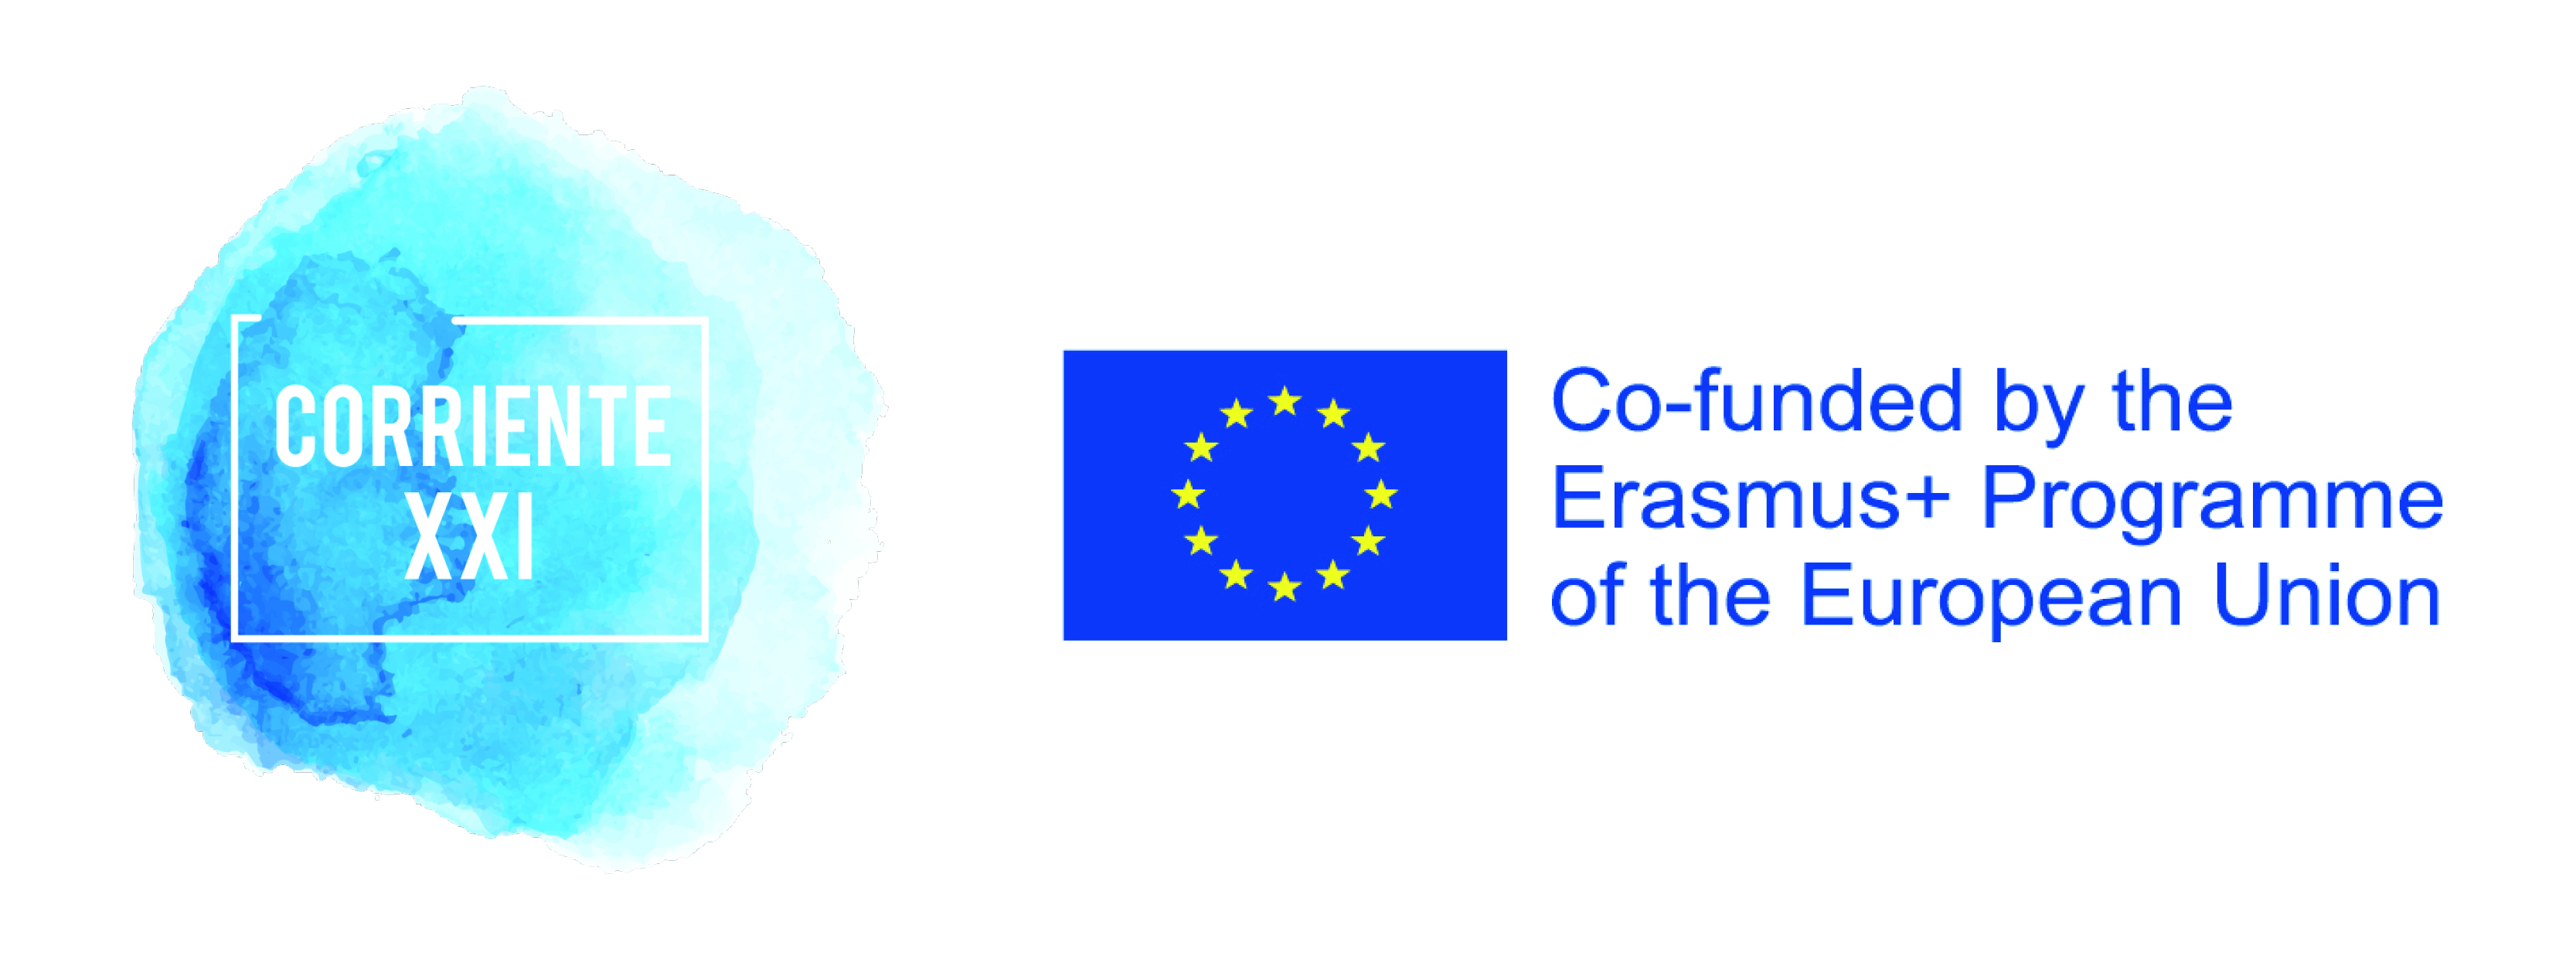 corriente xxi logo with EU